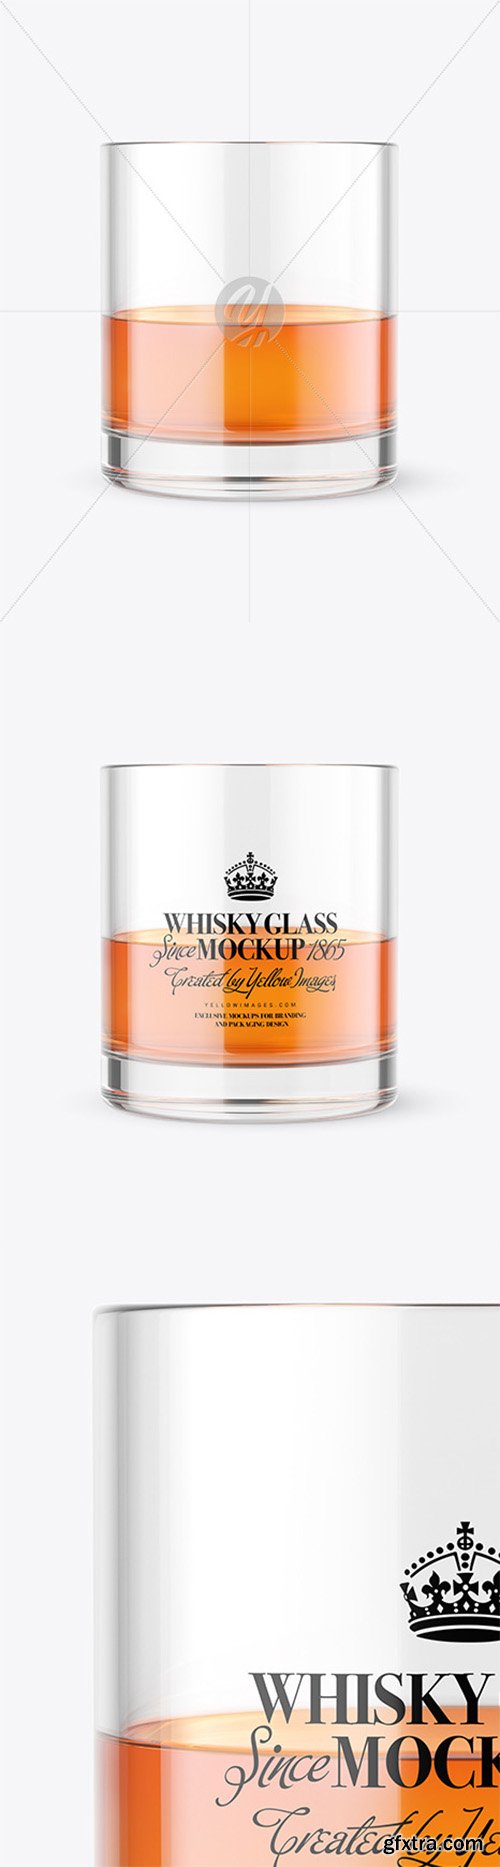 Whisky Glass Mockup 64937